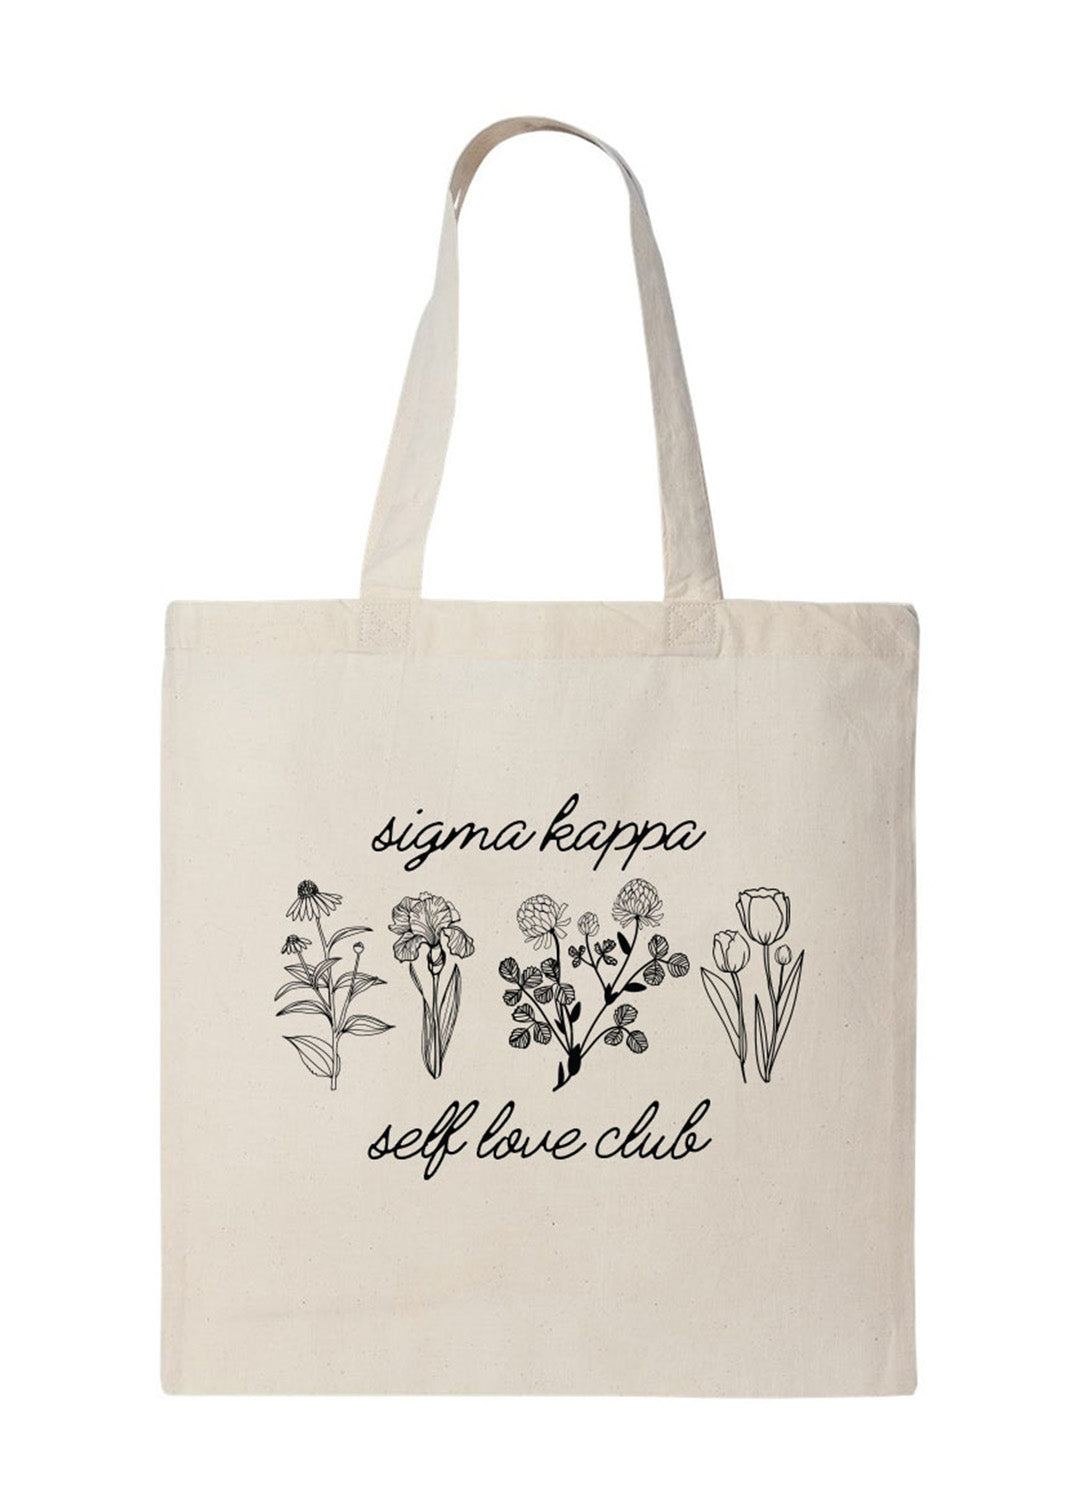 Self Love Club Tote Bag